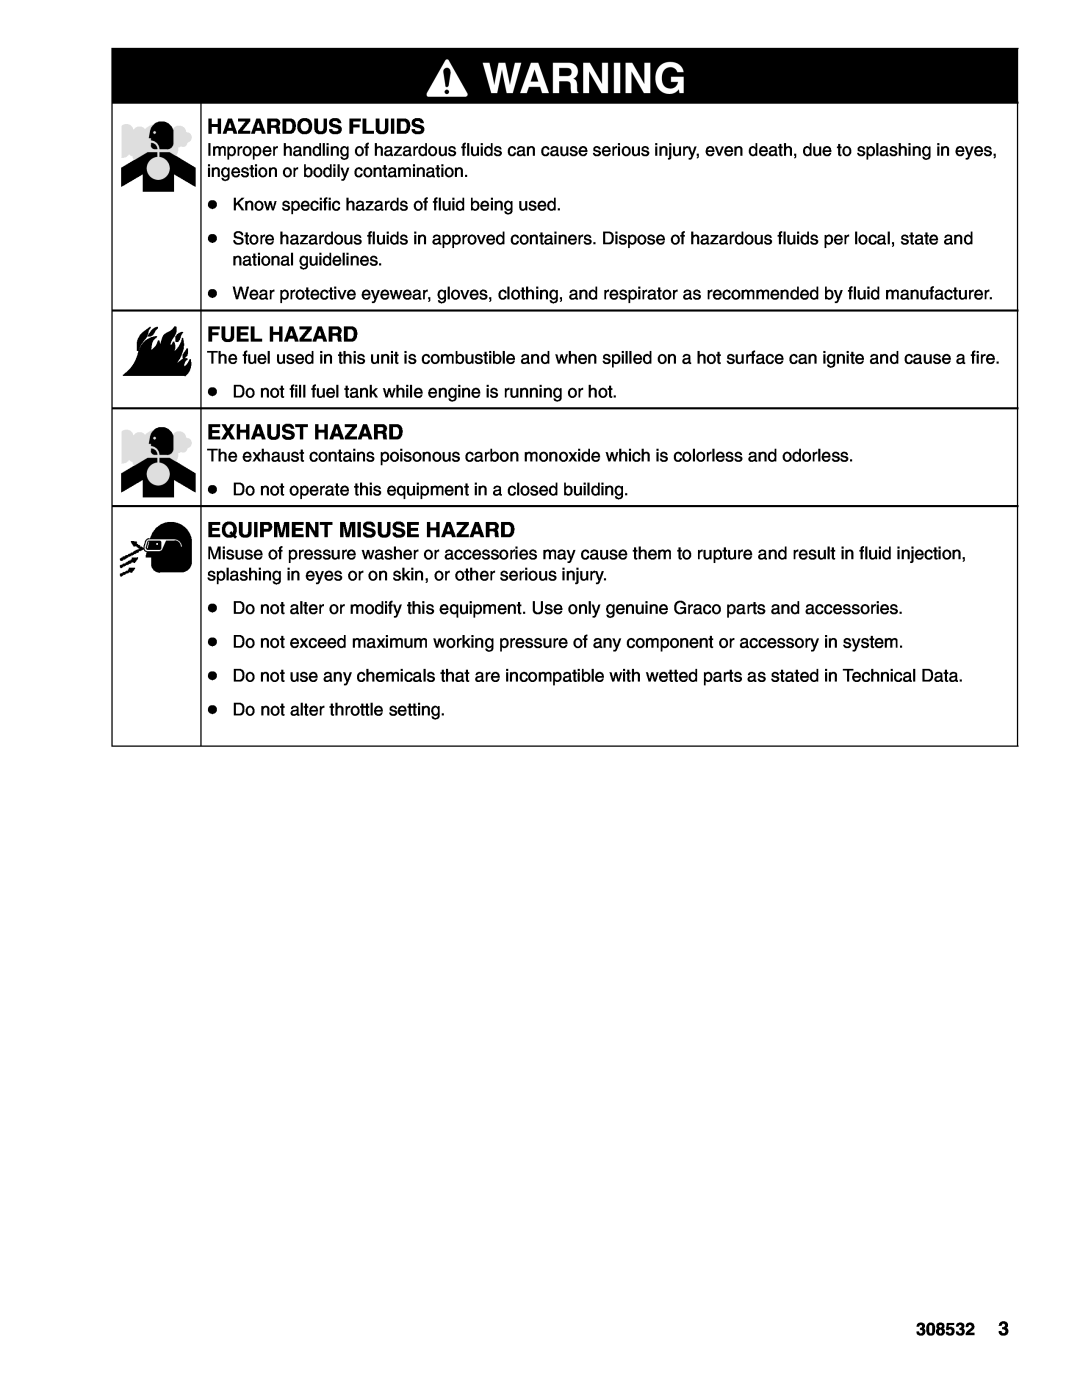 Hitachi 4043 important safety instructions Hazardous Fluids, Fuel Hazard, Exhaust Hazard, Equipment Misuse Hazard 